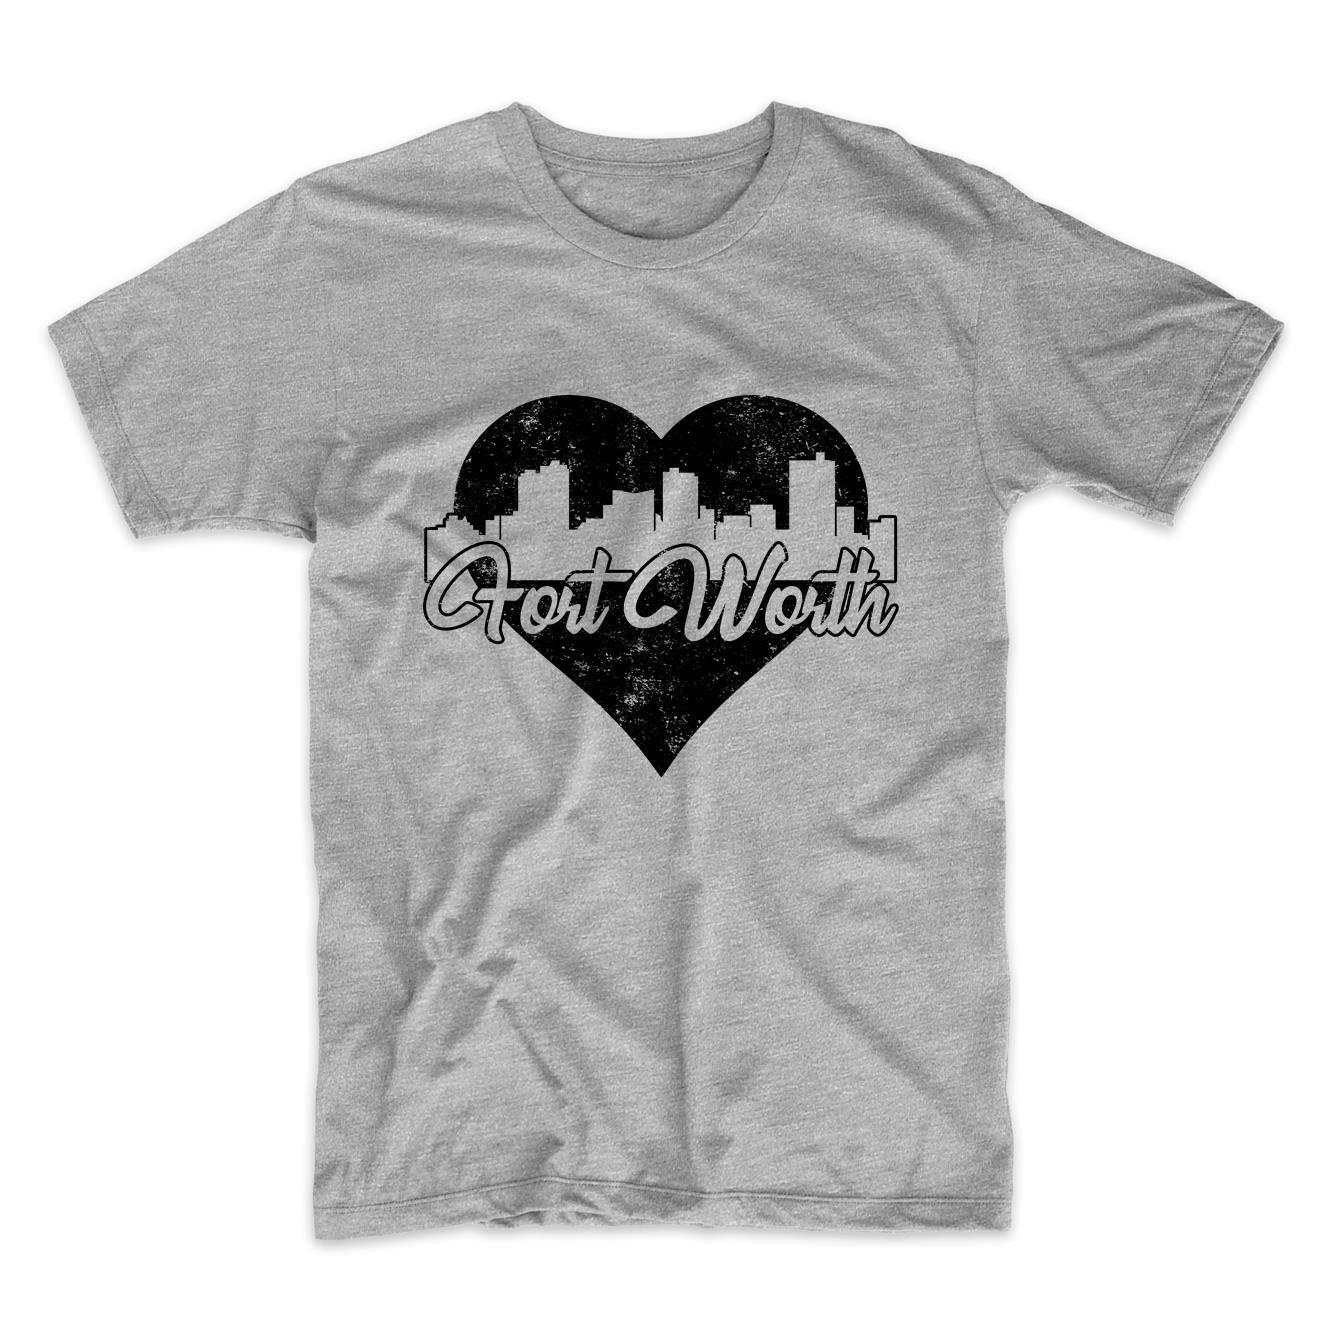 Retro Fort Worth Texas Skyline Heart Distressed T-Shirt